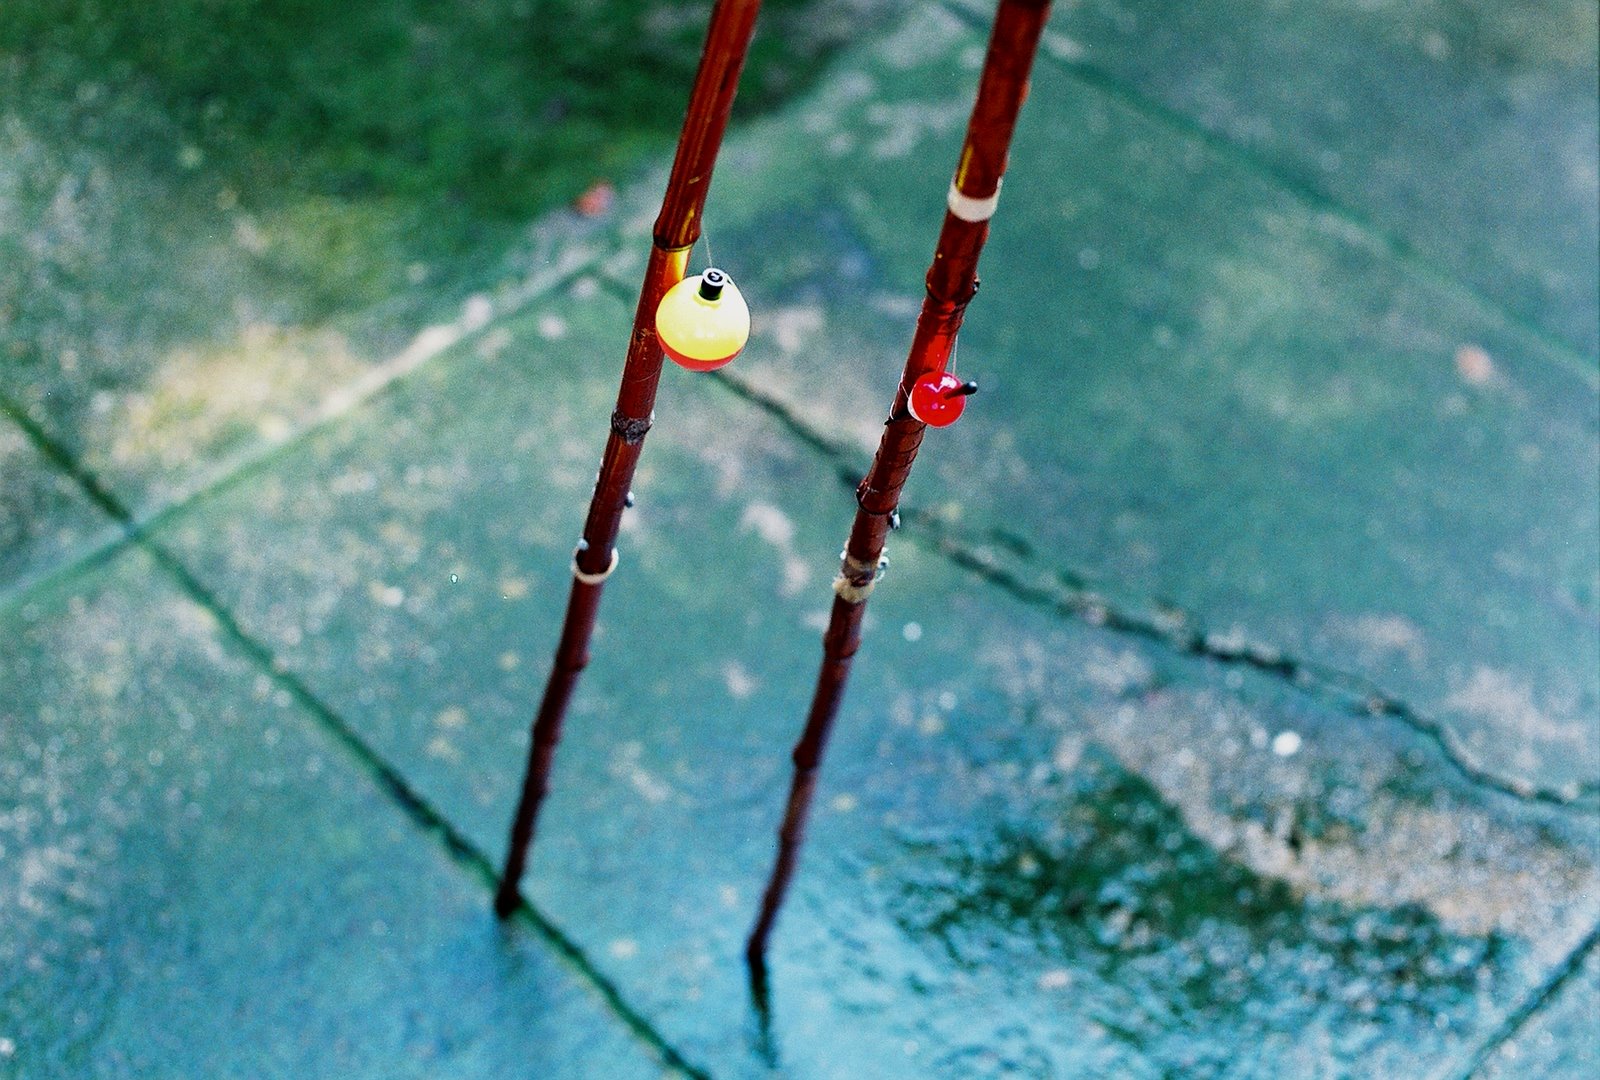 [cane+fishing+poles+THREE+BRLA+10-15-07.jpg]